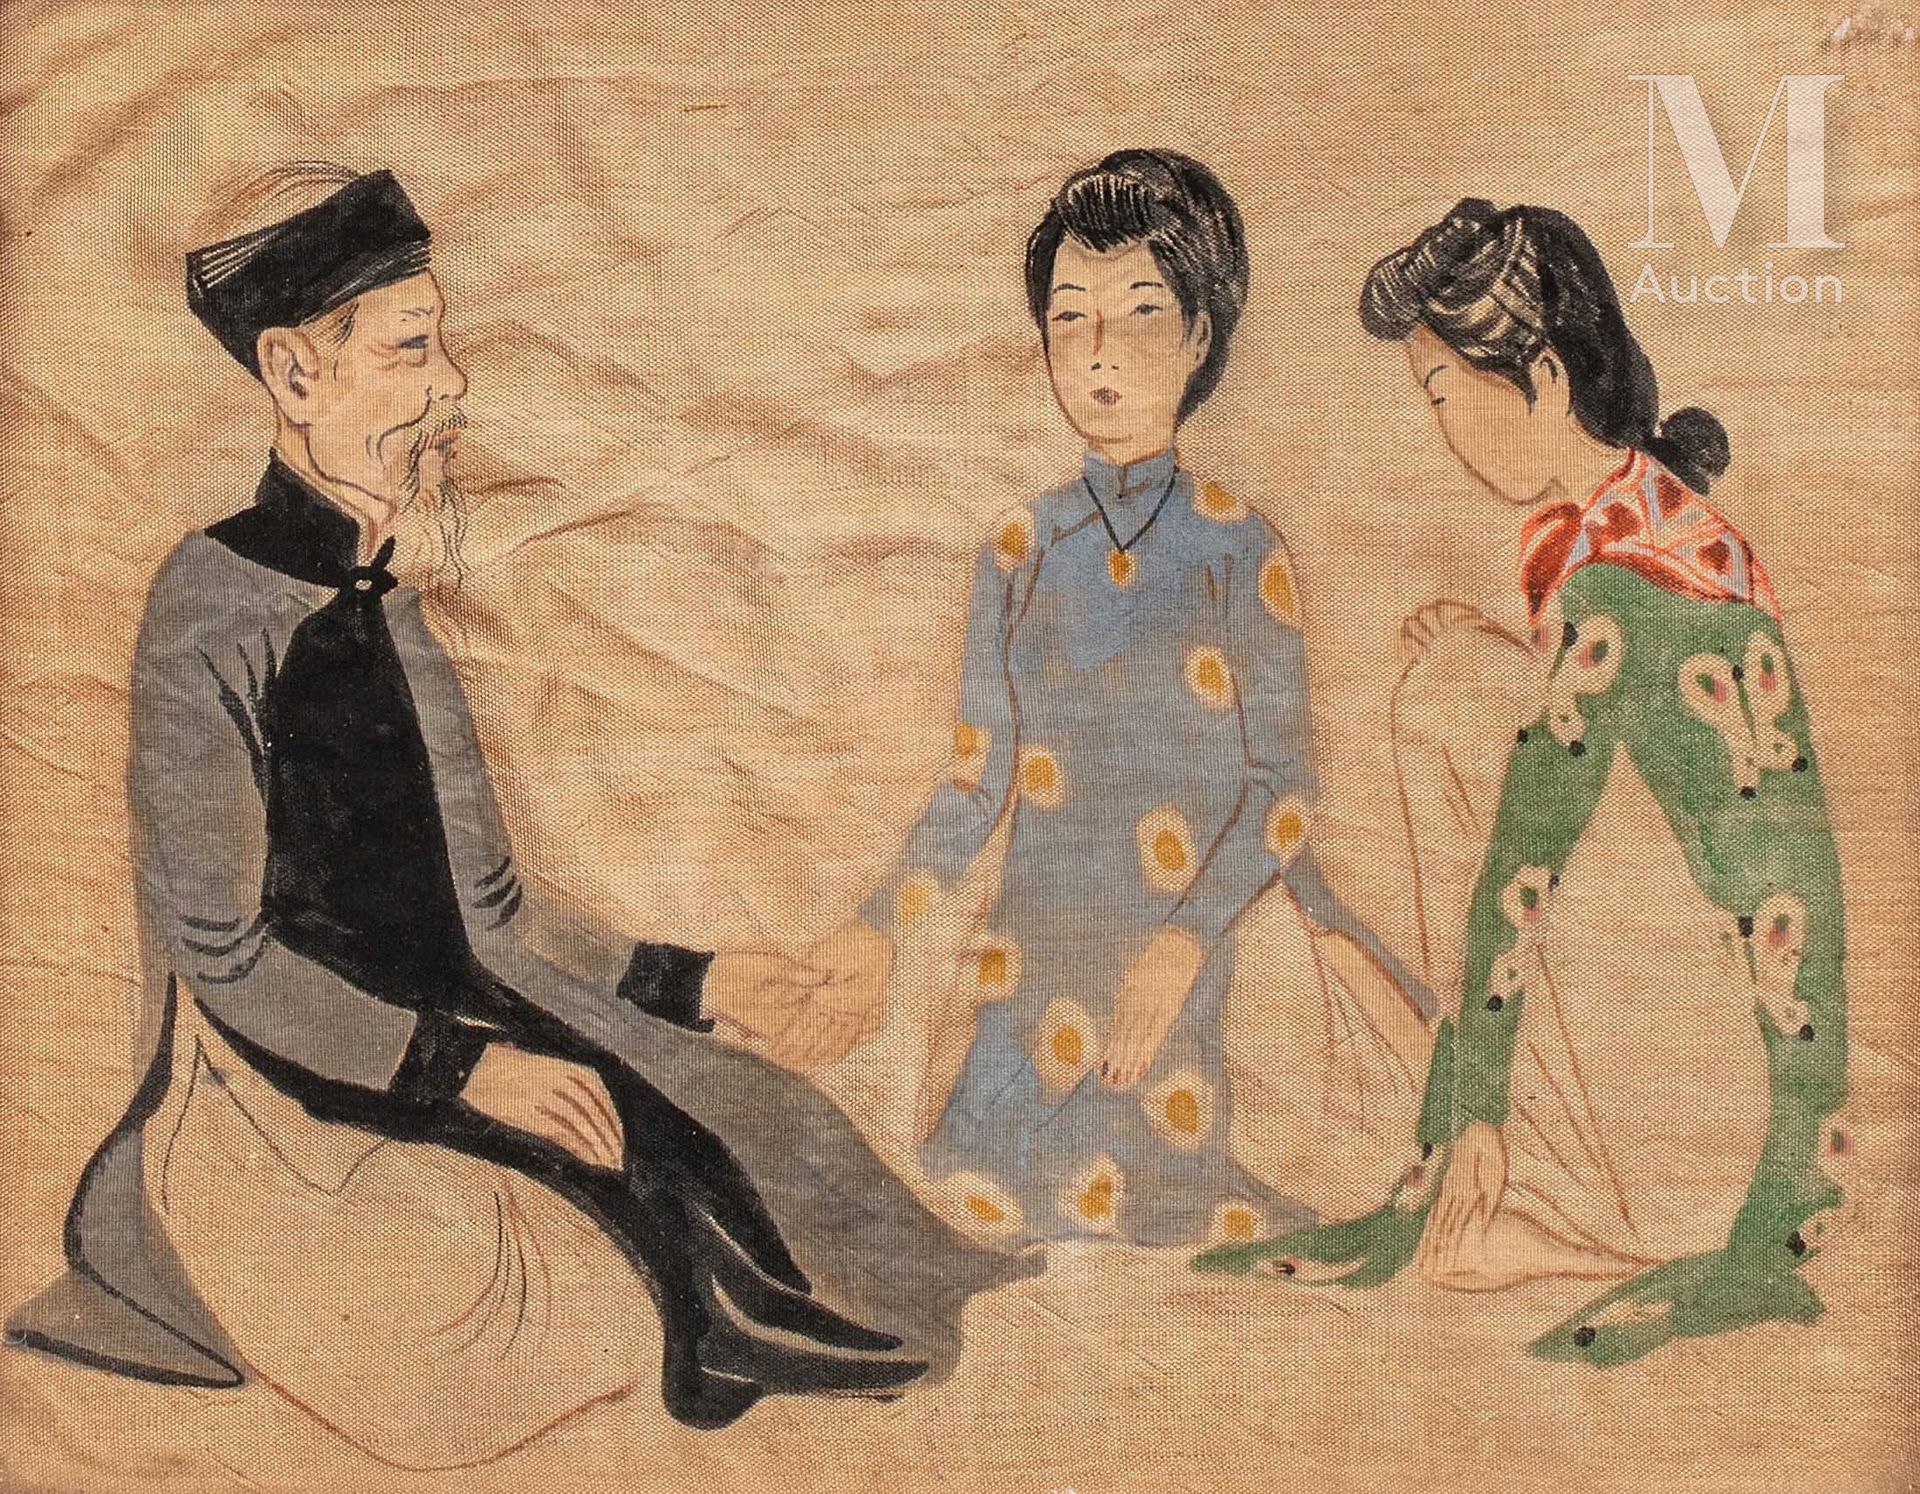 VIETNAM, XXe siècle, La chiromancie 丝绸上的水墨和色彩

无符号

16.5 x 21.5 厘米